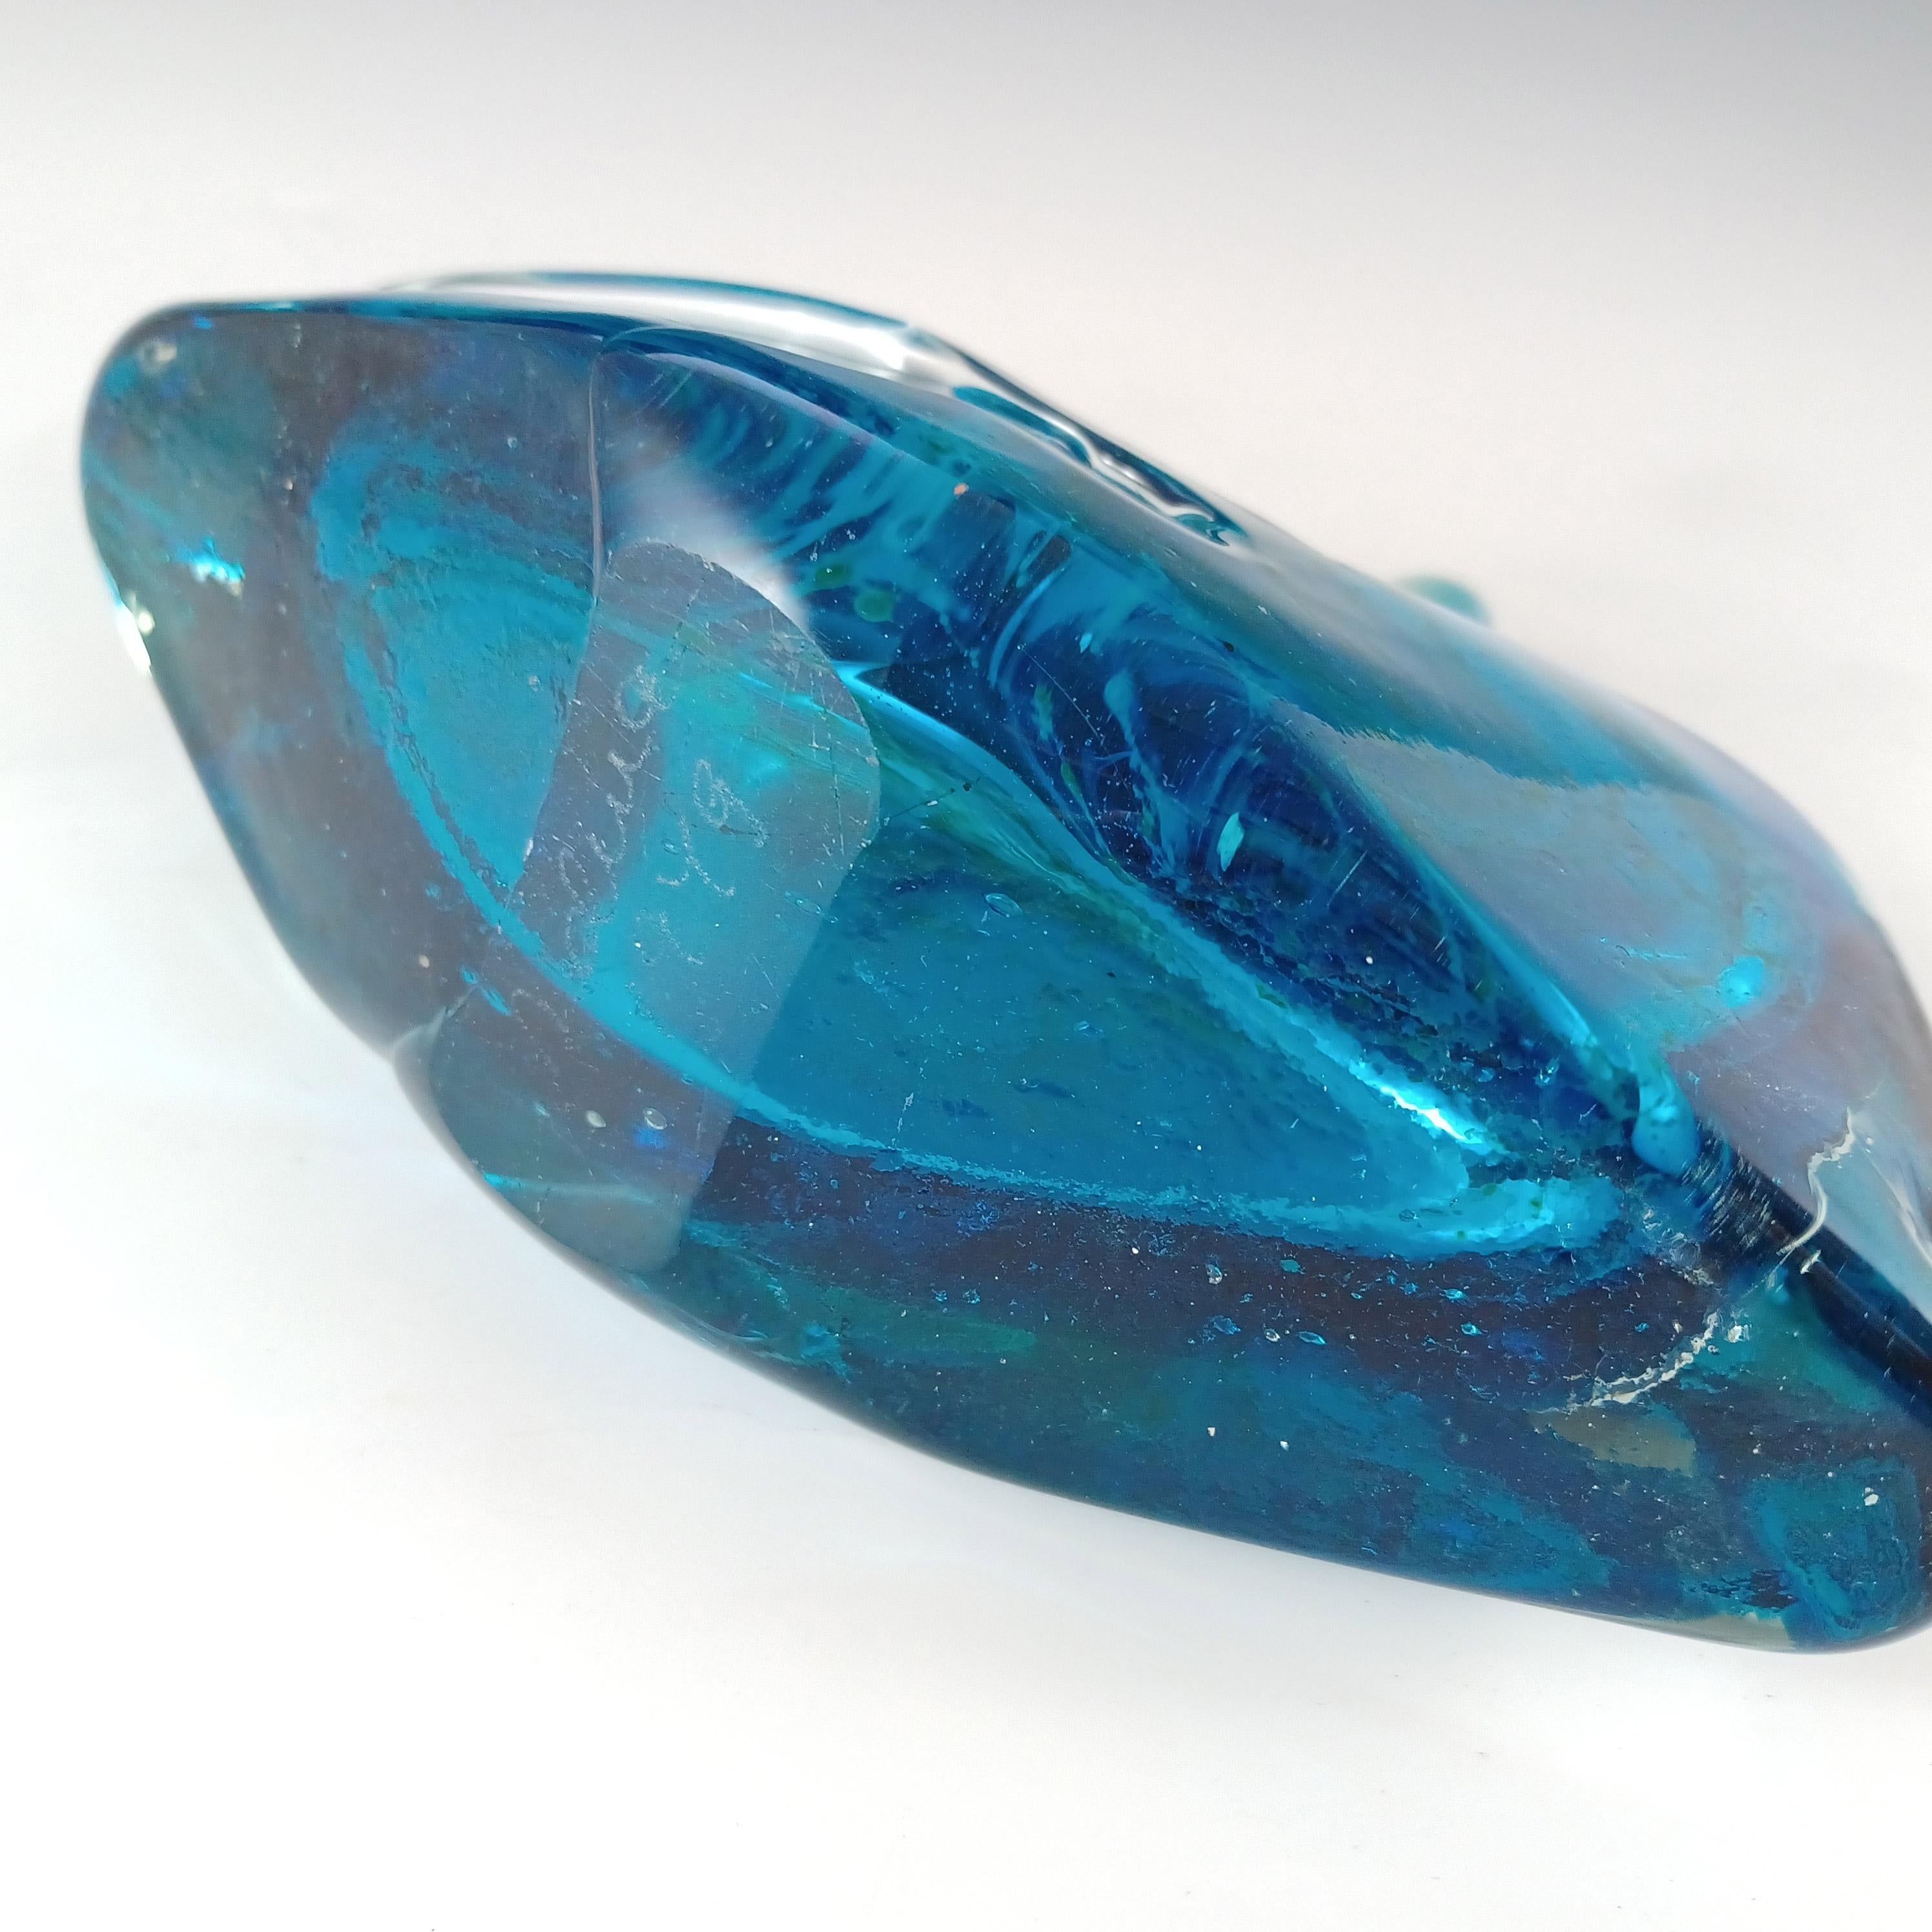 Mdina Maltese Blue Glass 'Fish' / 'Axe Head' Vase - Signed 1979 For Sale 3